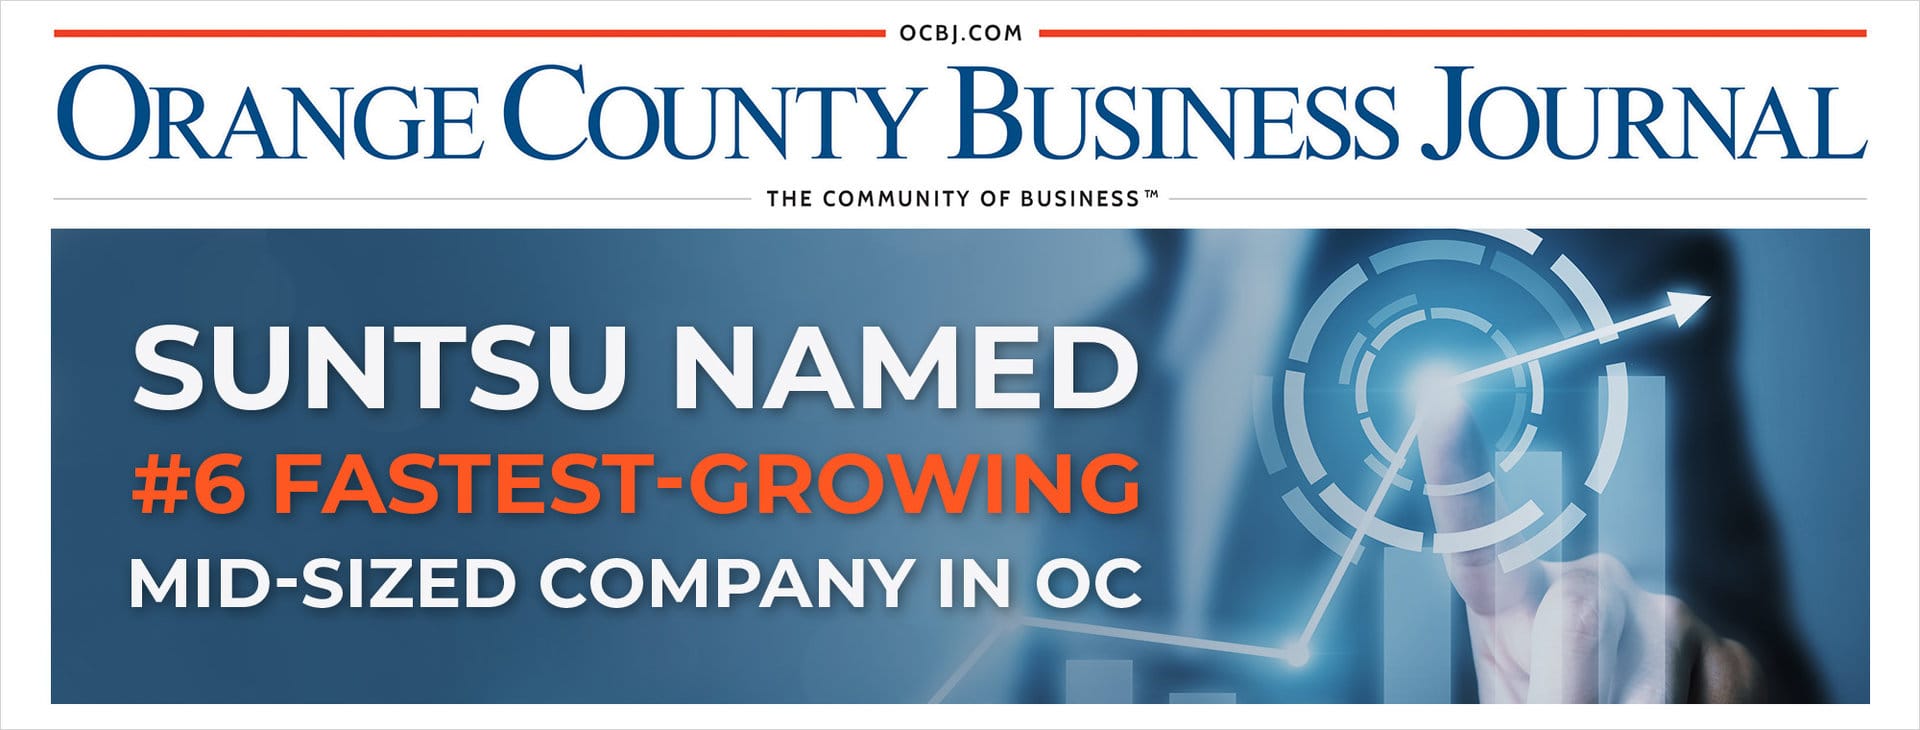 Suntsu Named #6 Fastest-Growing Mid-Sized Company in OC